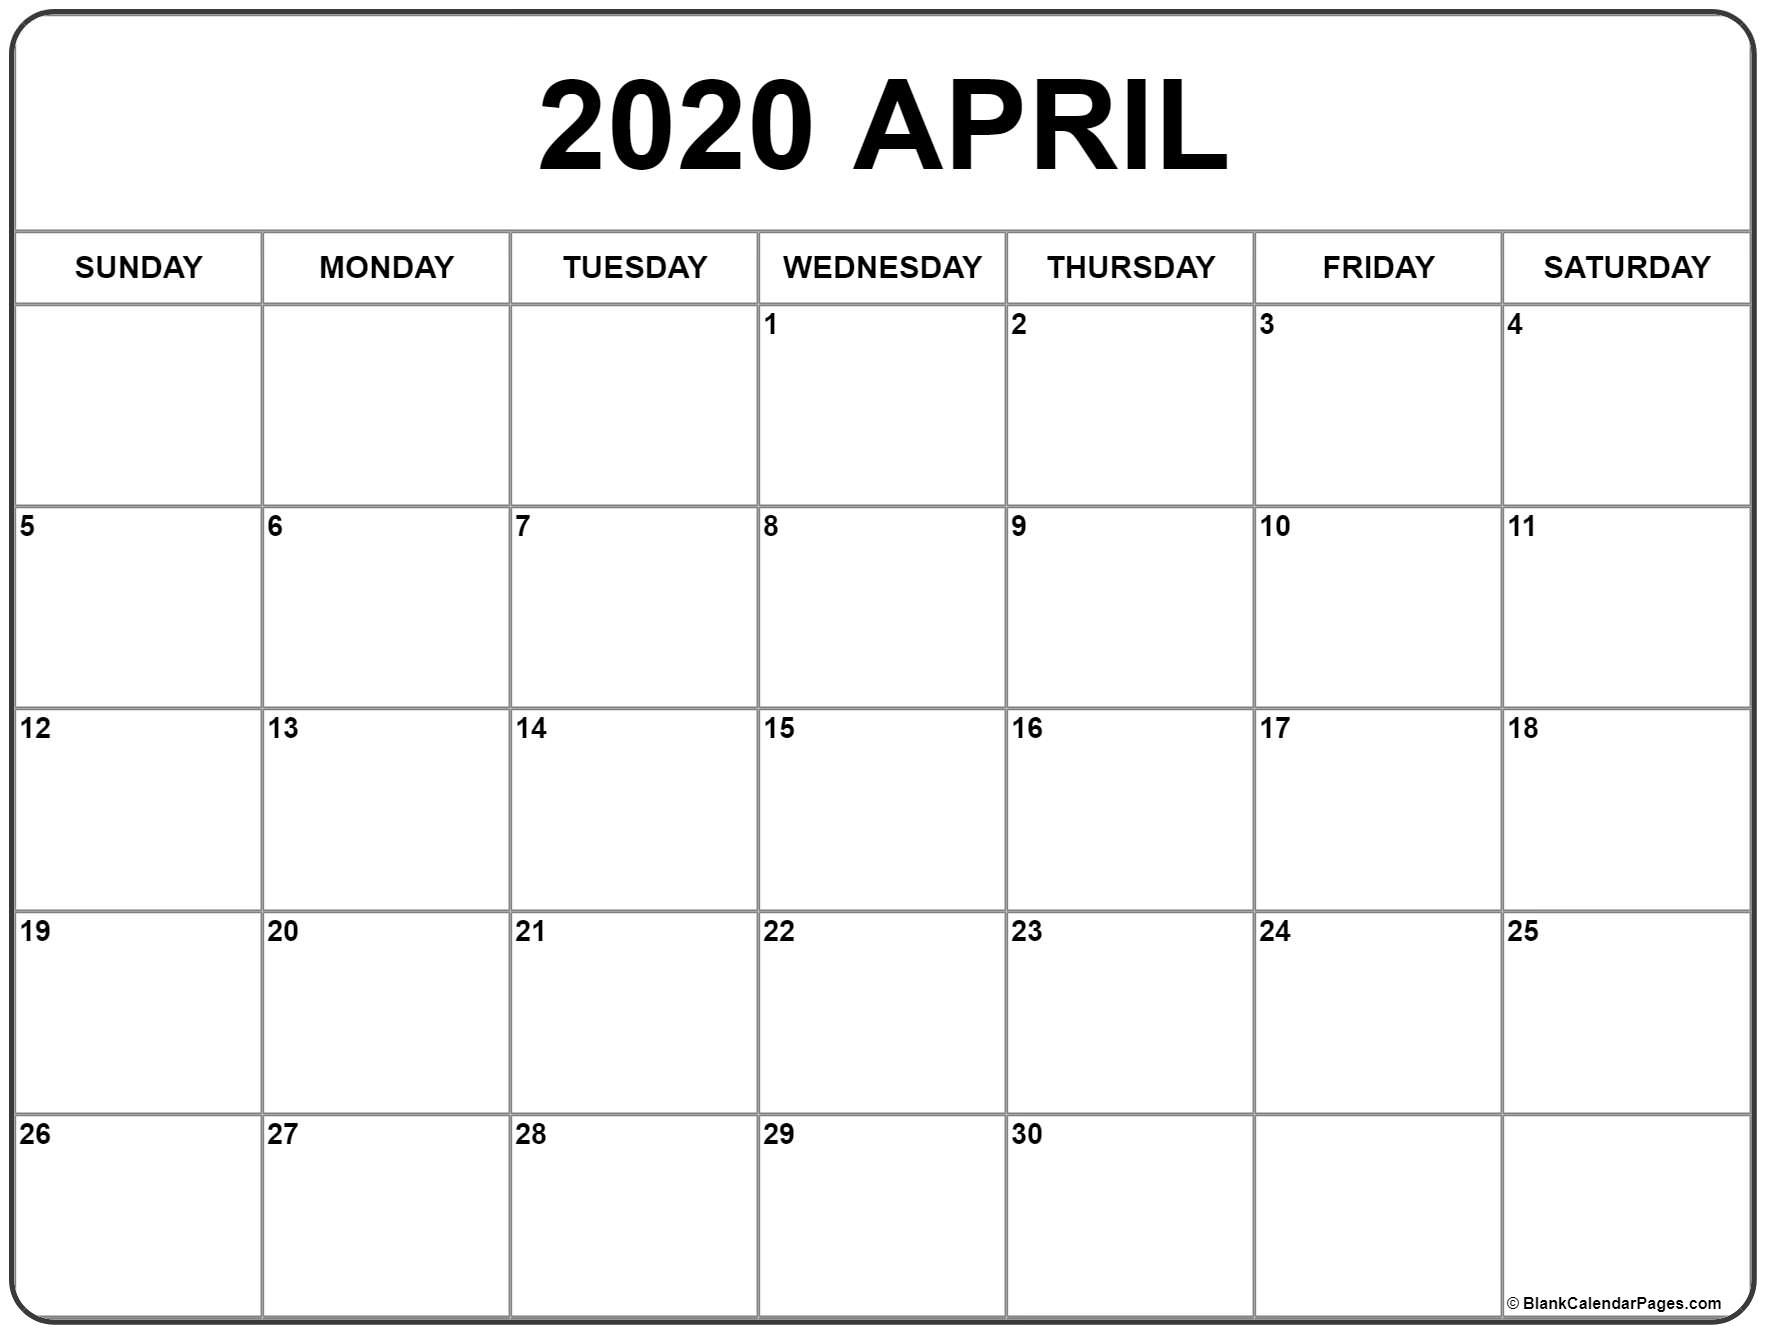 April 2020 Calendar | Free Printable Monthly Calendars-Printable Monthly 5 Day Calendar 2020